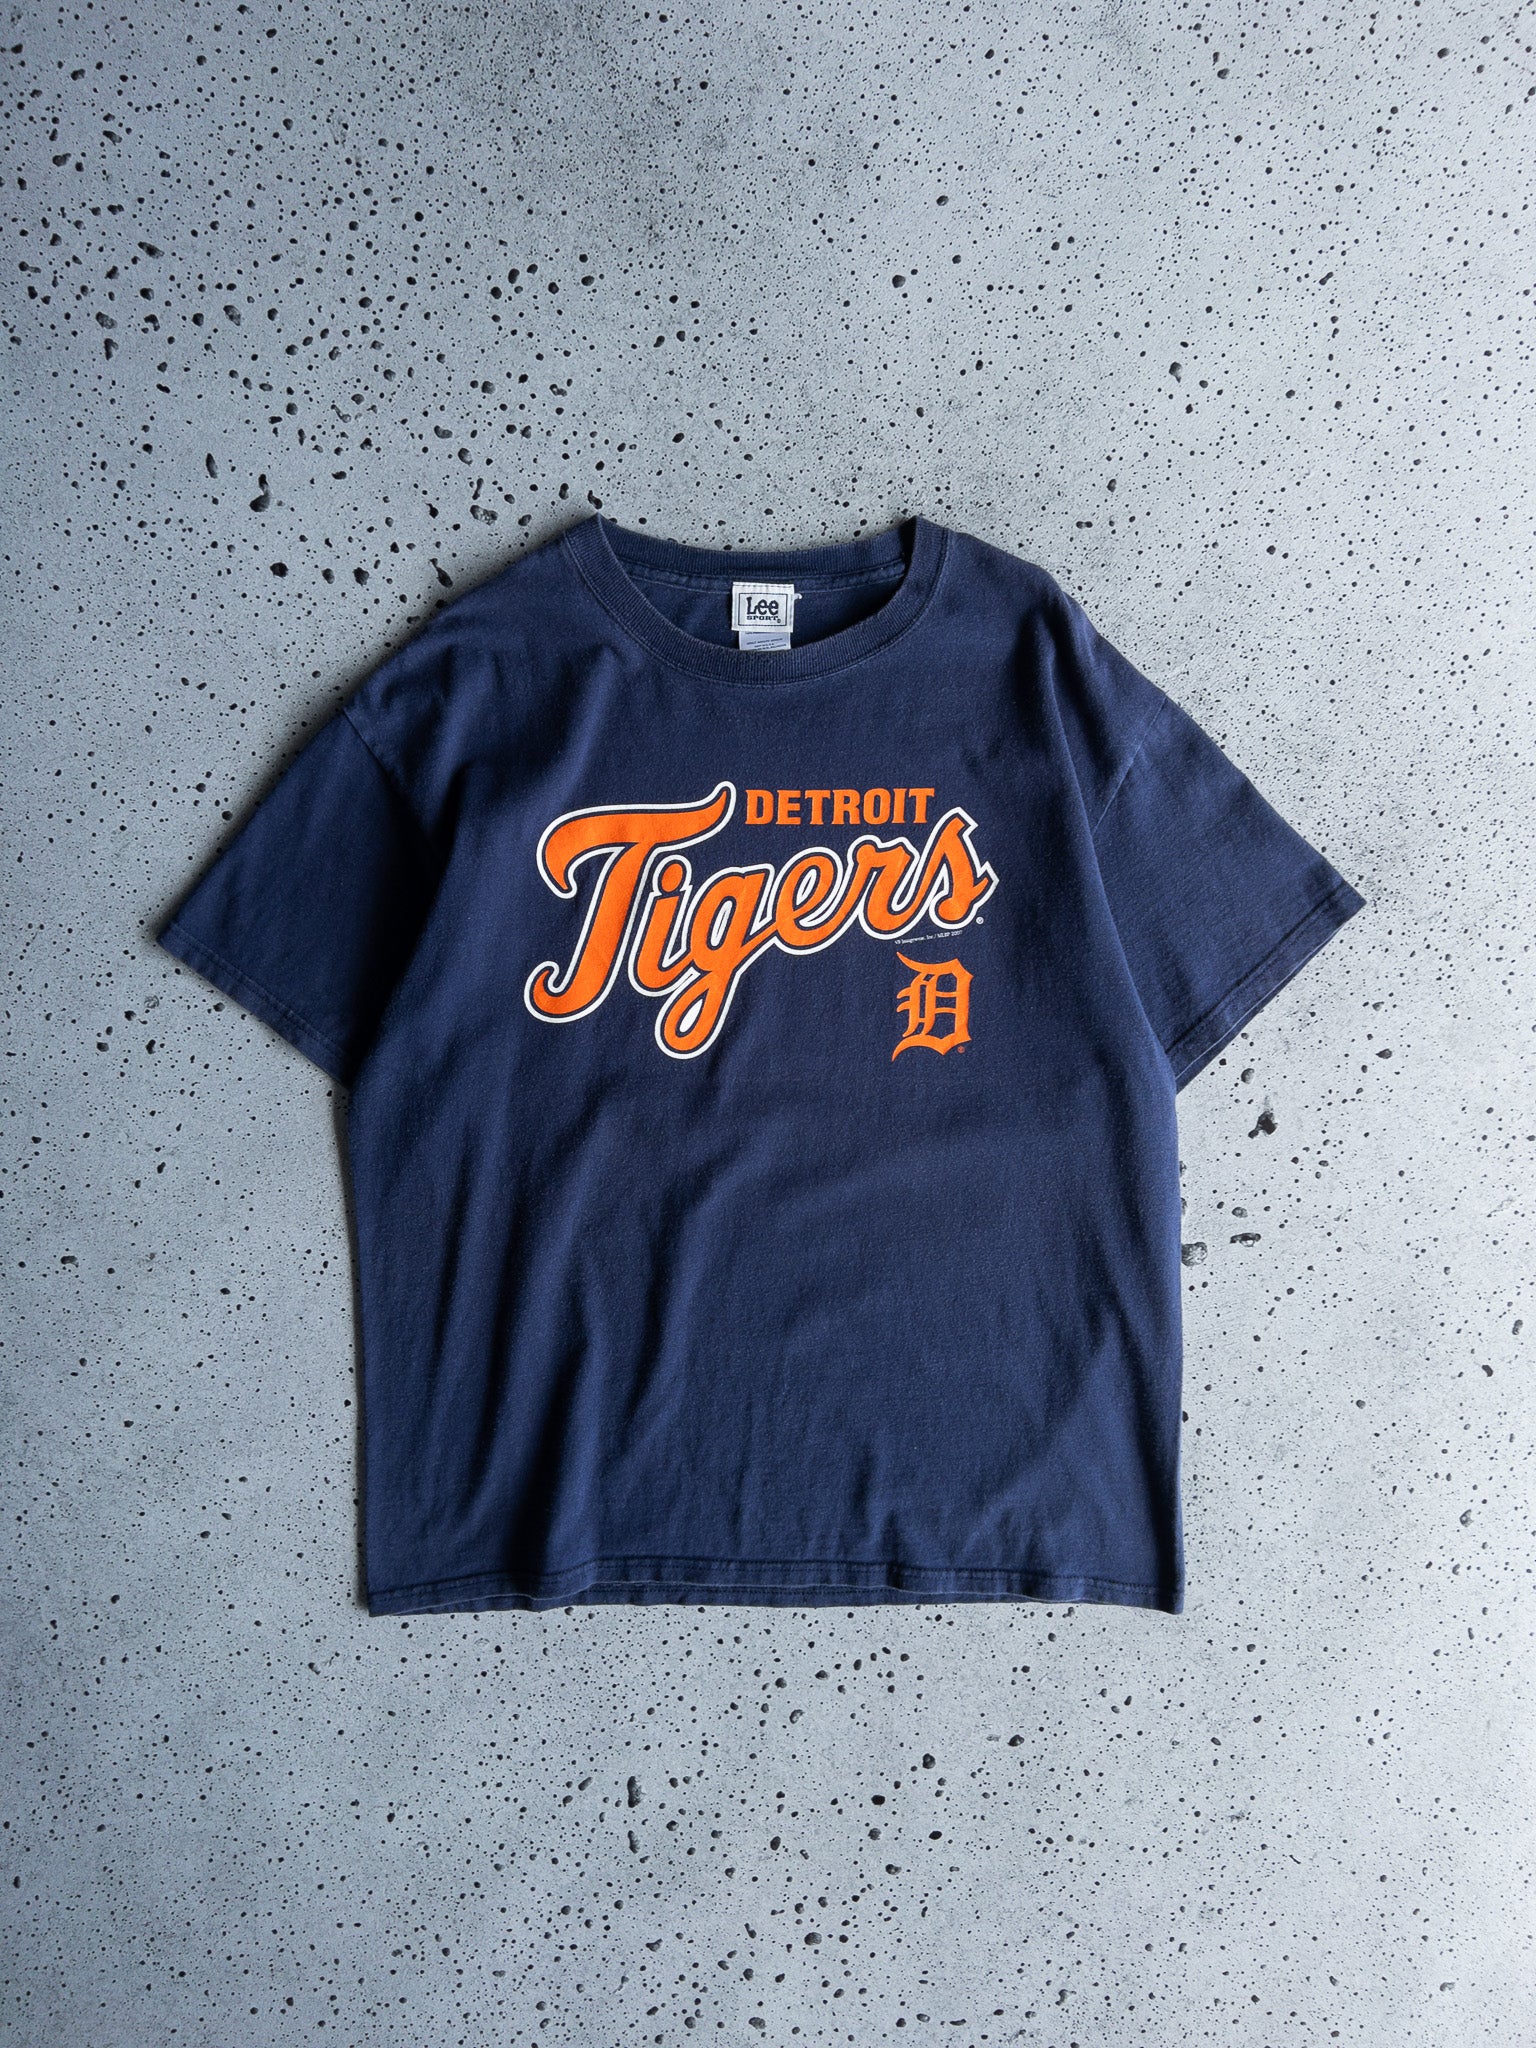 Vintage Detroit Tigers Tee (L)